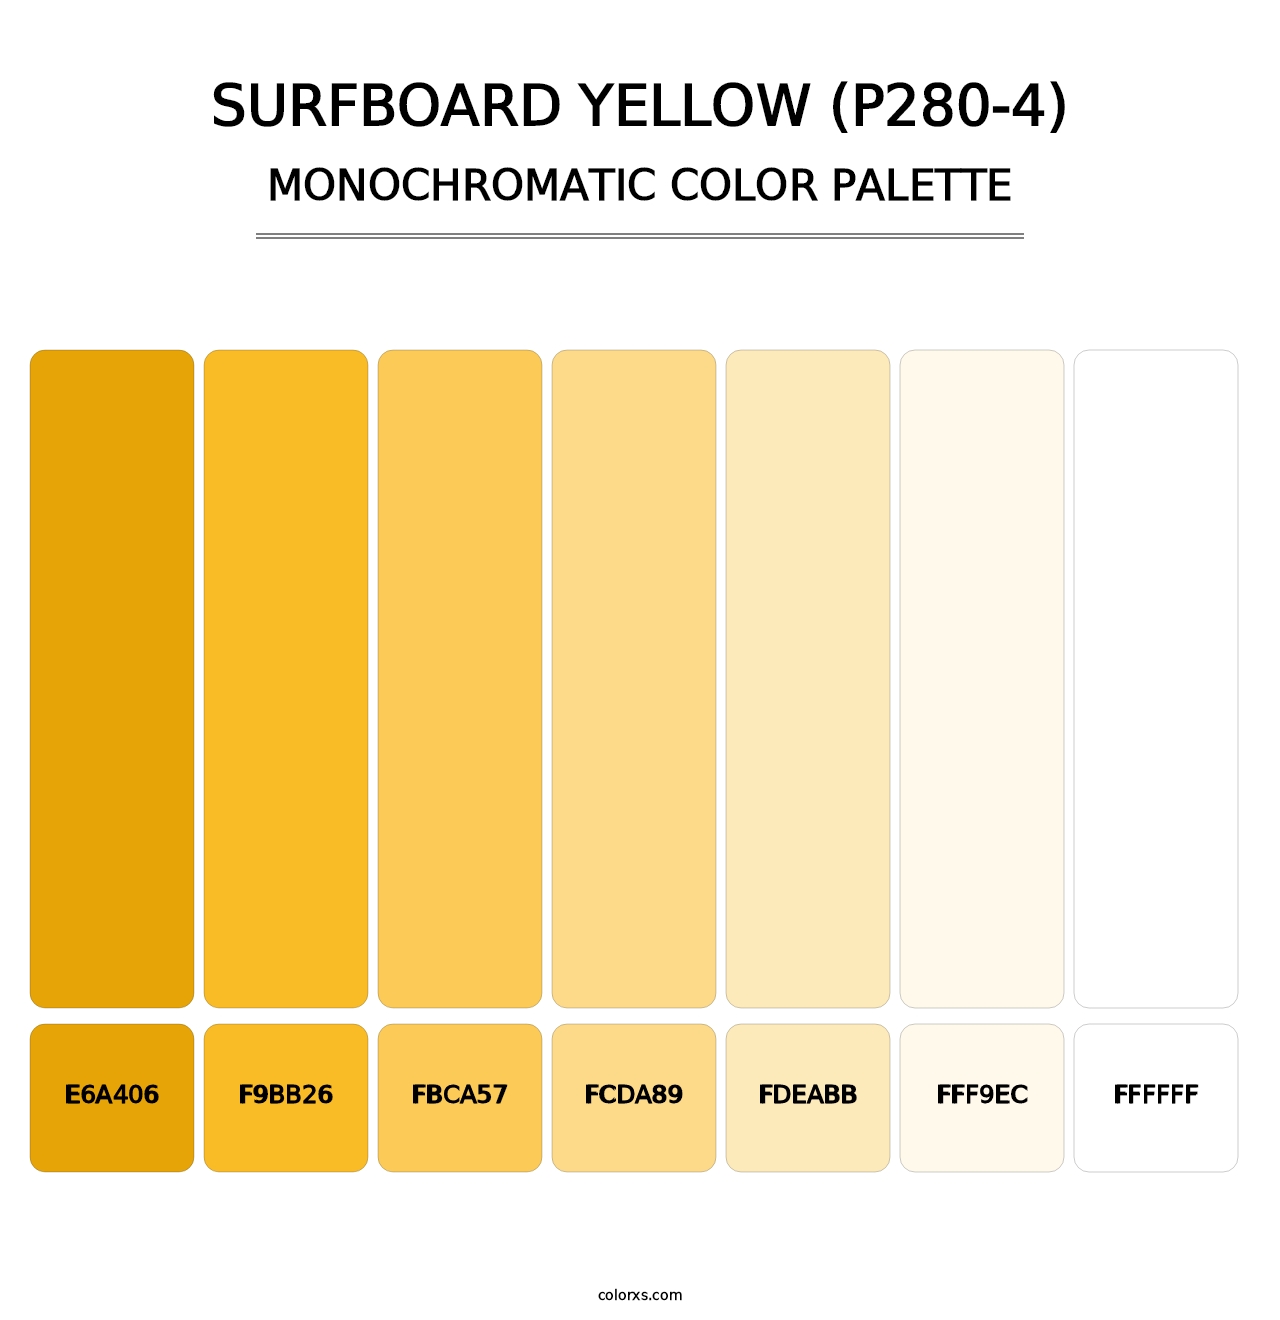 Surfboard Yellow (P280-4) - Monochromatic Color Palette